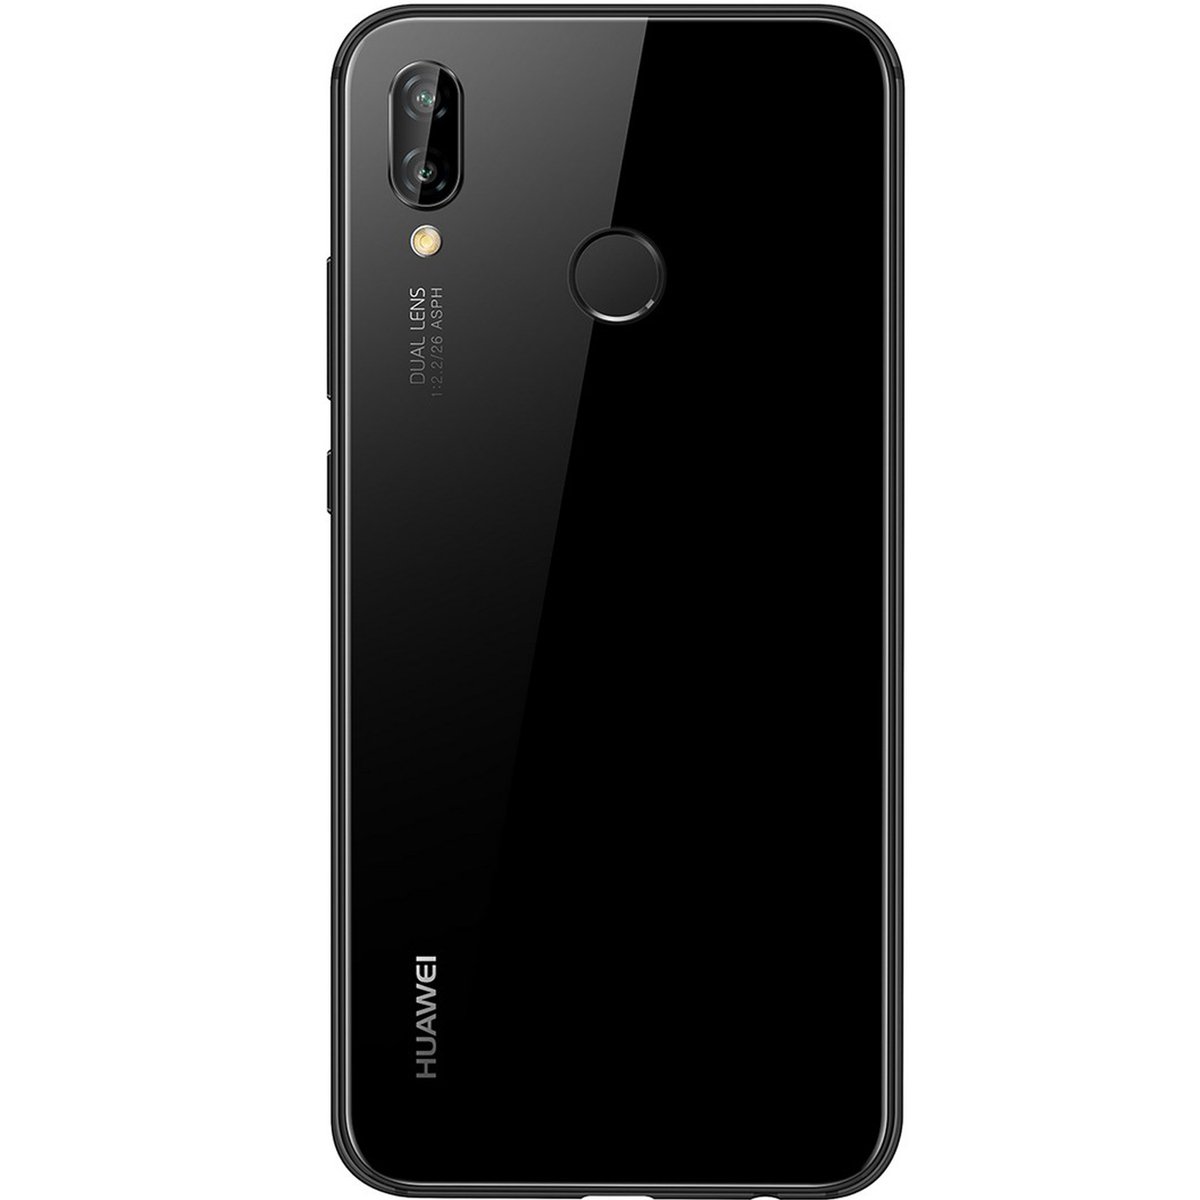 Huawei nova 3e 64GB 4G Black